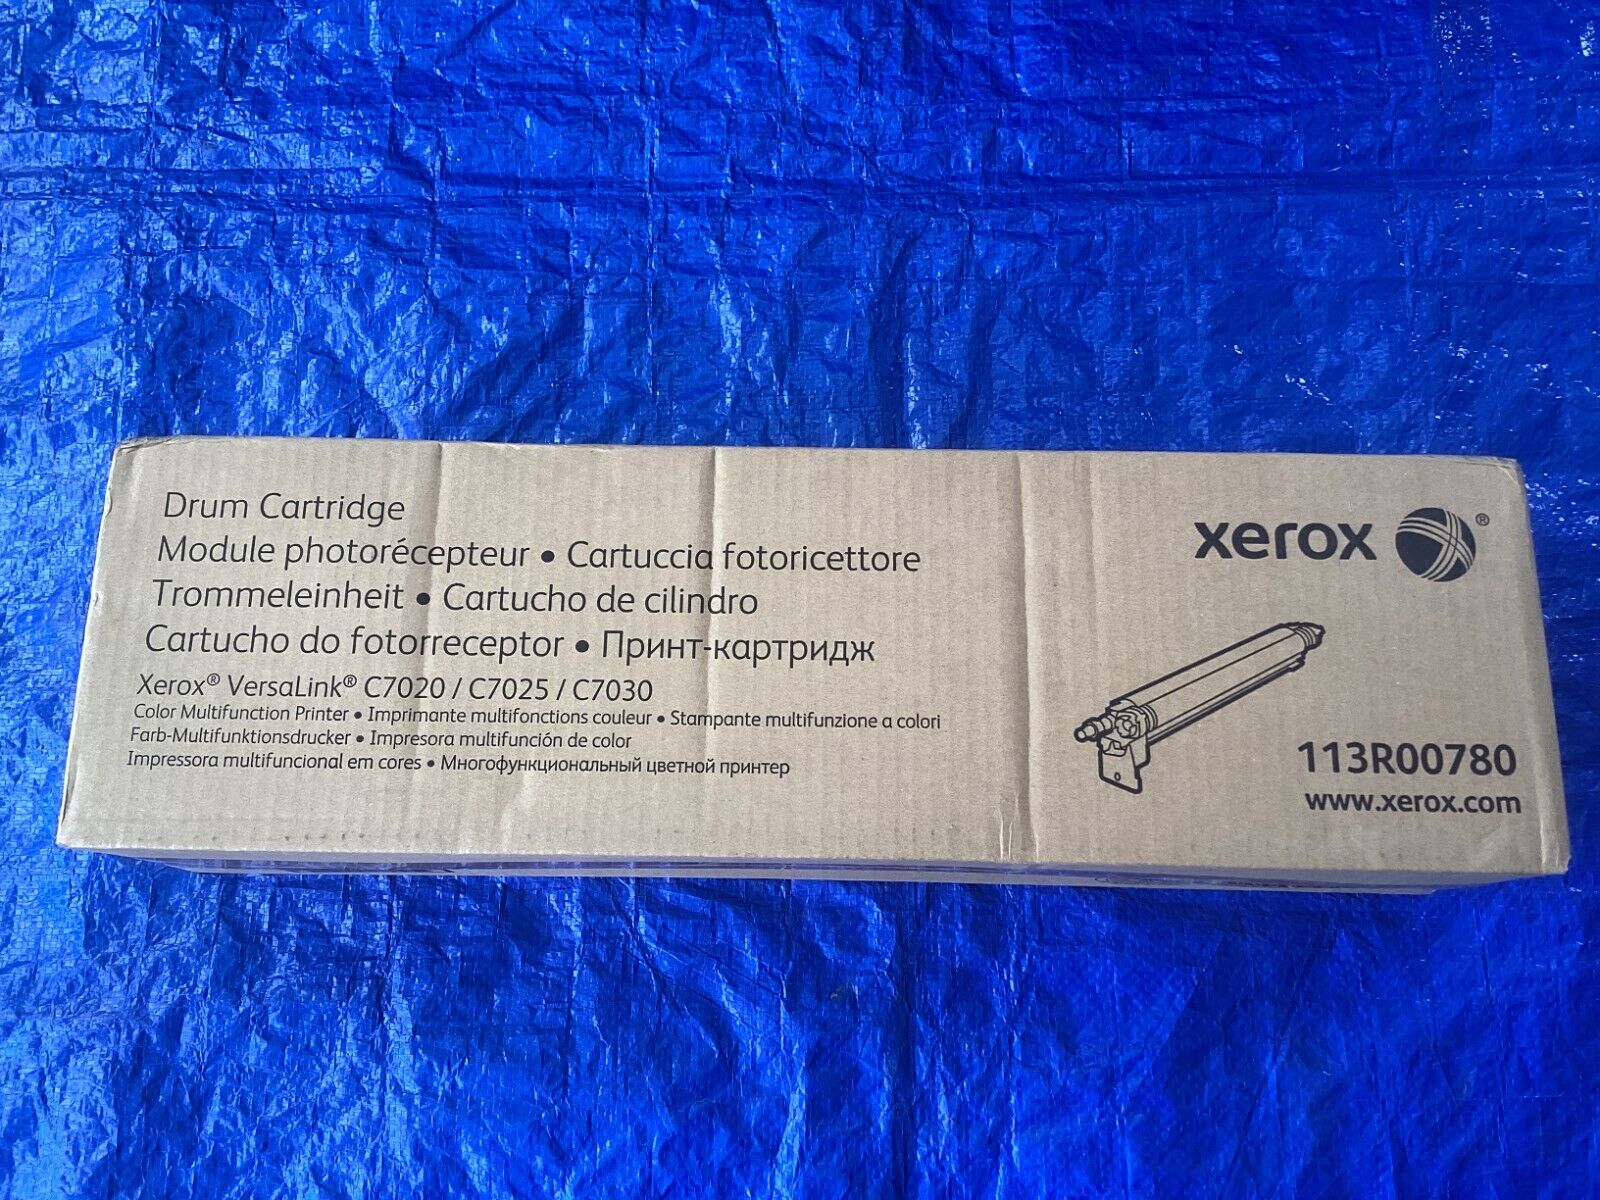 NEW Xerox VersaLink C7030, C7025, C7020 Drum Cartridge (113R00780)